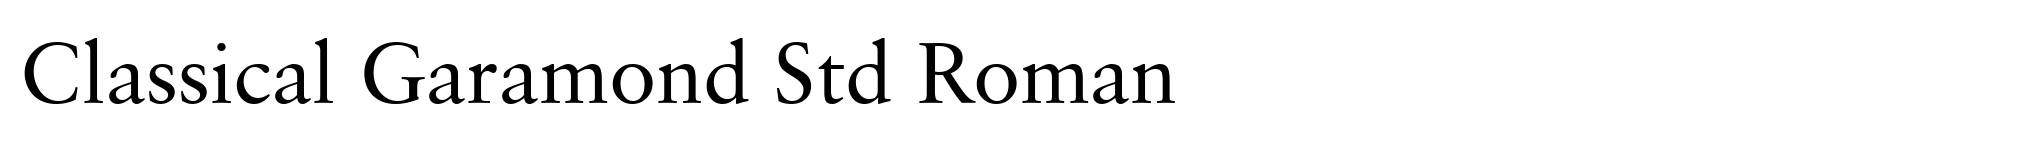 Classical Garamond Std Roman image